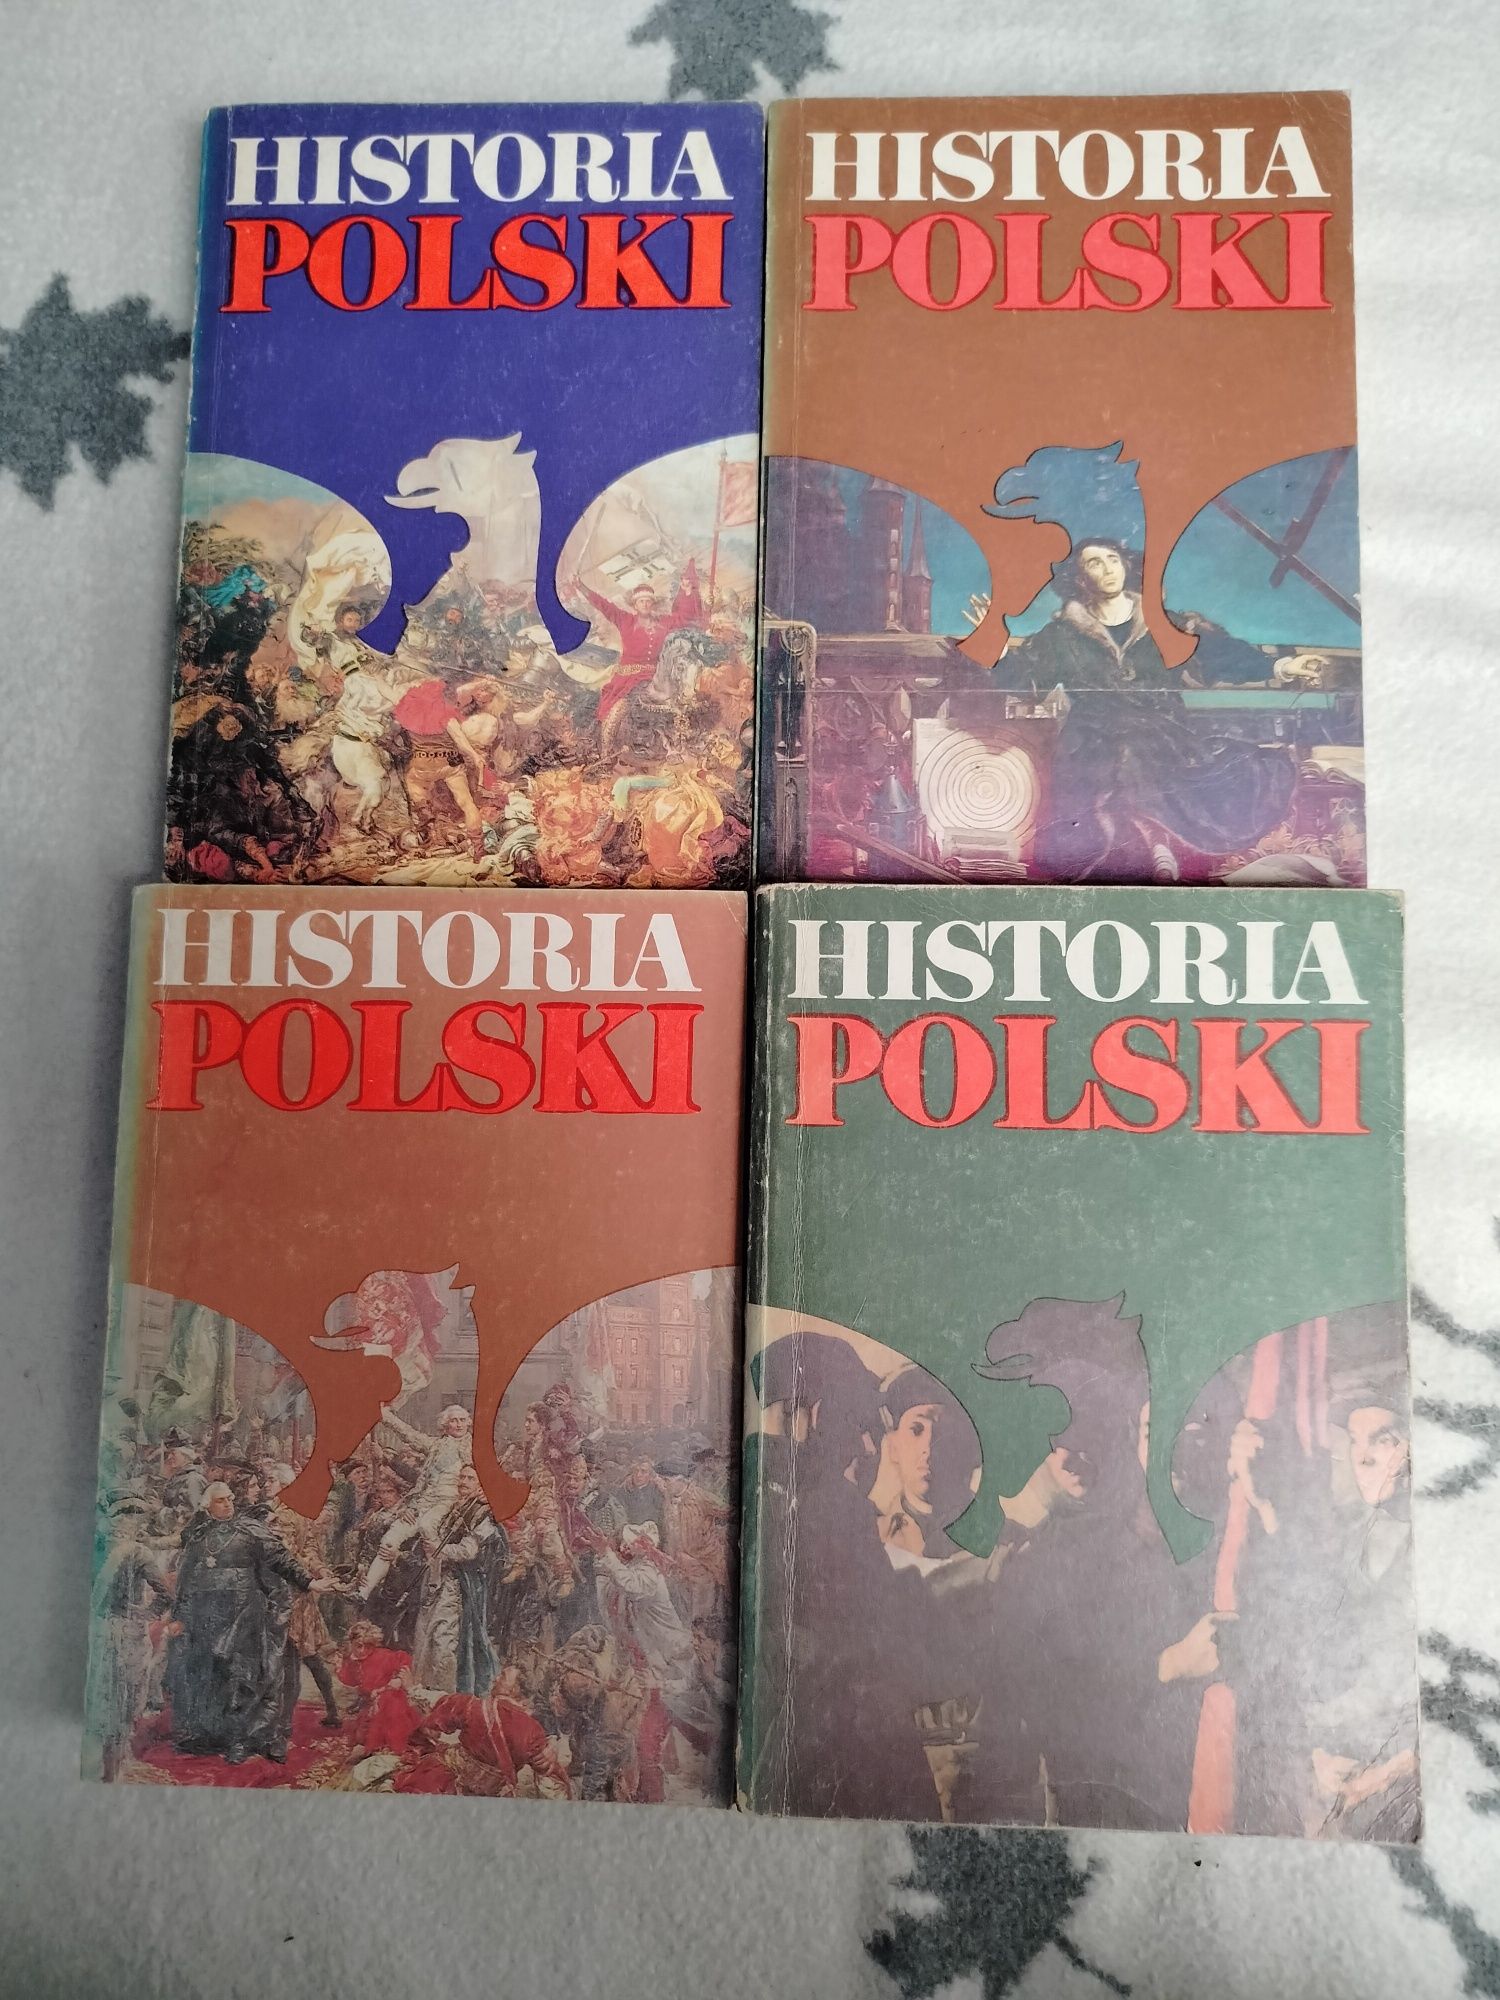 Historia Polski. 4 tomy